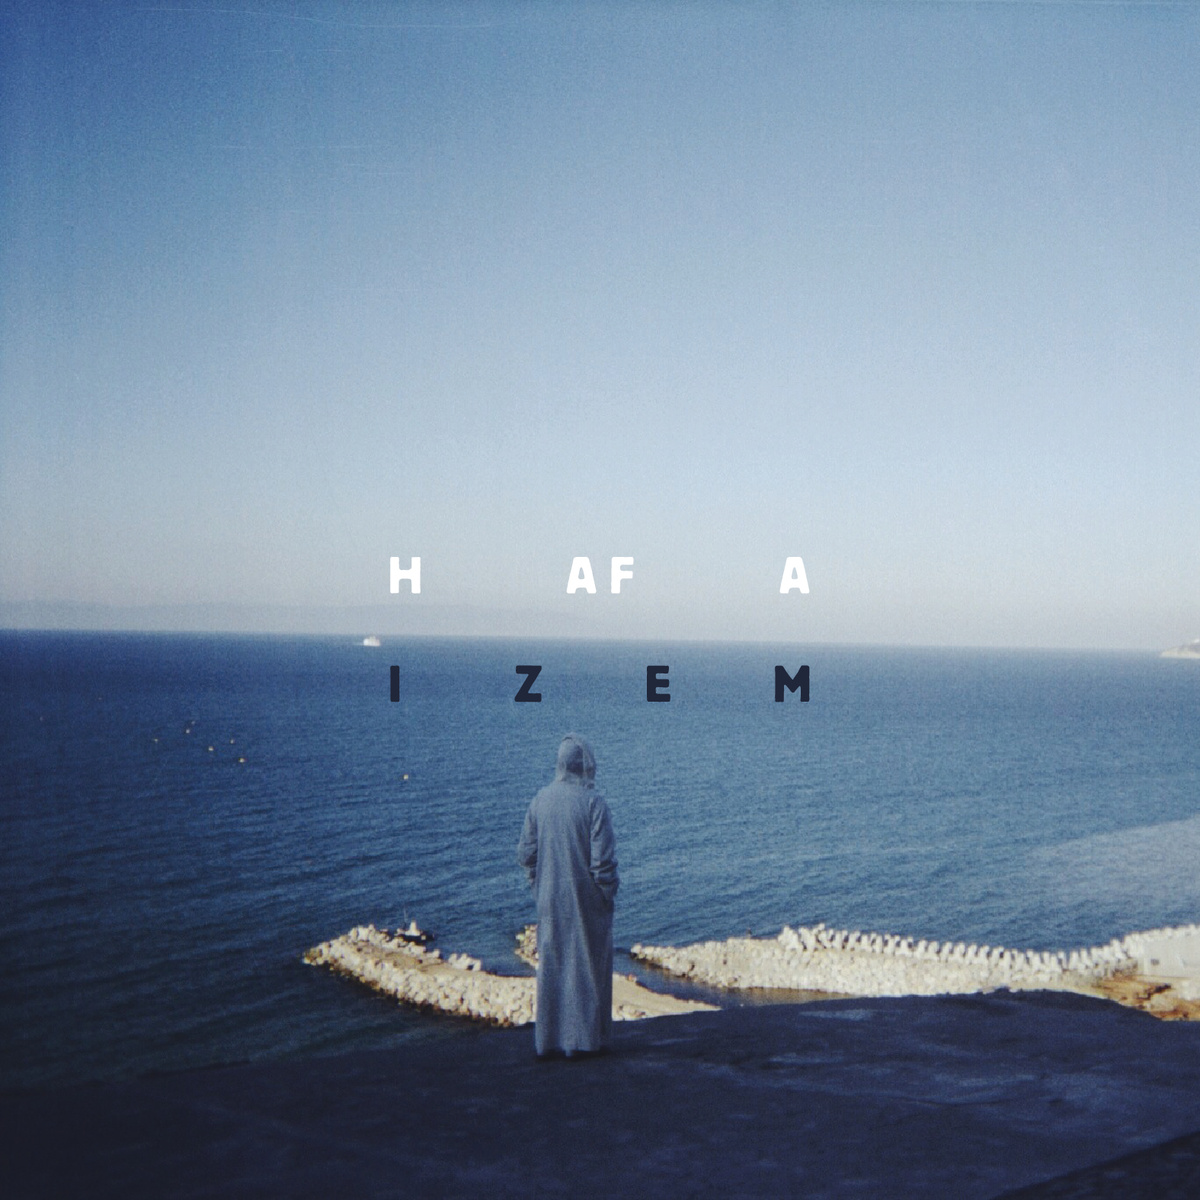 iZem - "Hafa" (Release) | @iZemSounds